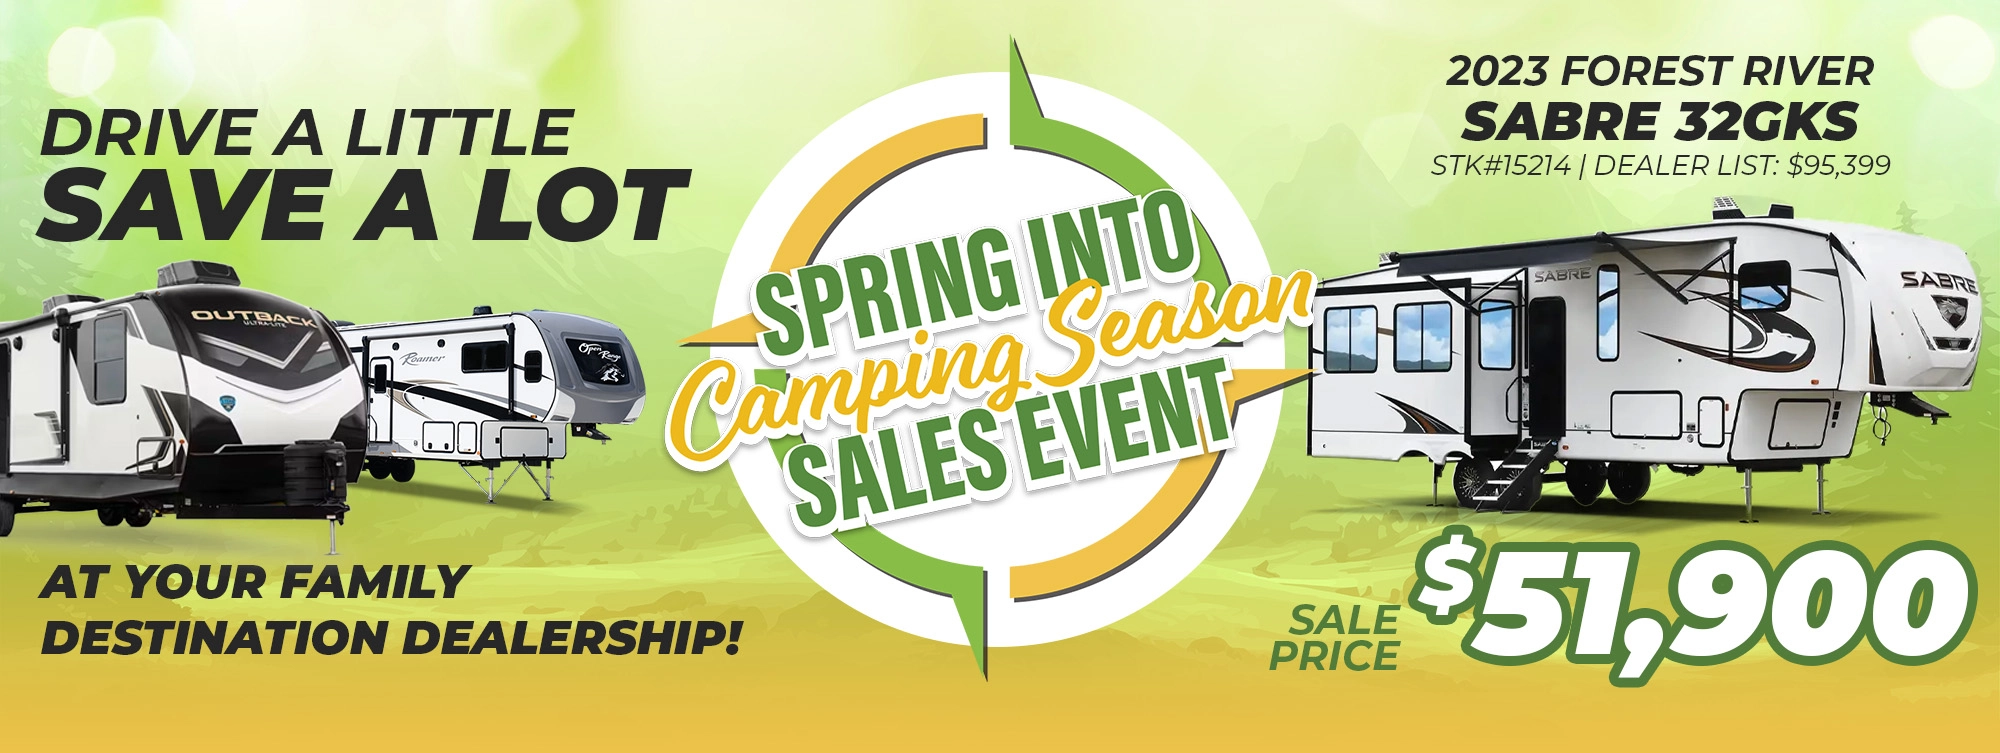 Spring Into Camping Season Sales Event at Lerch RV